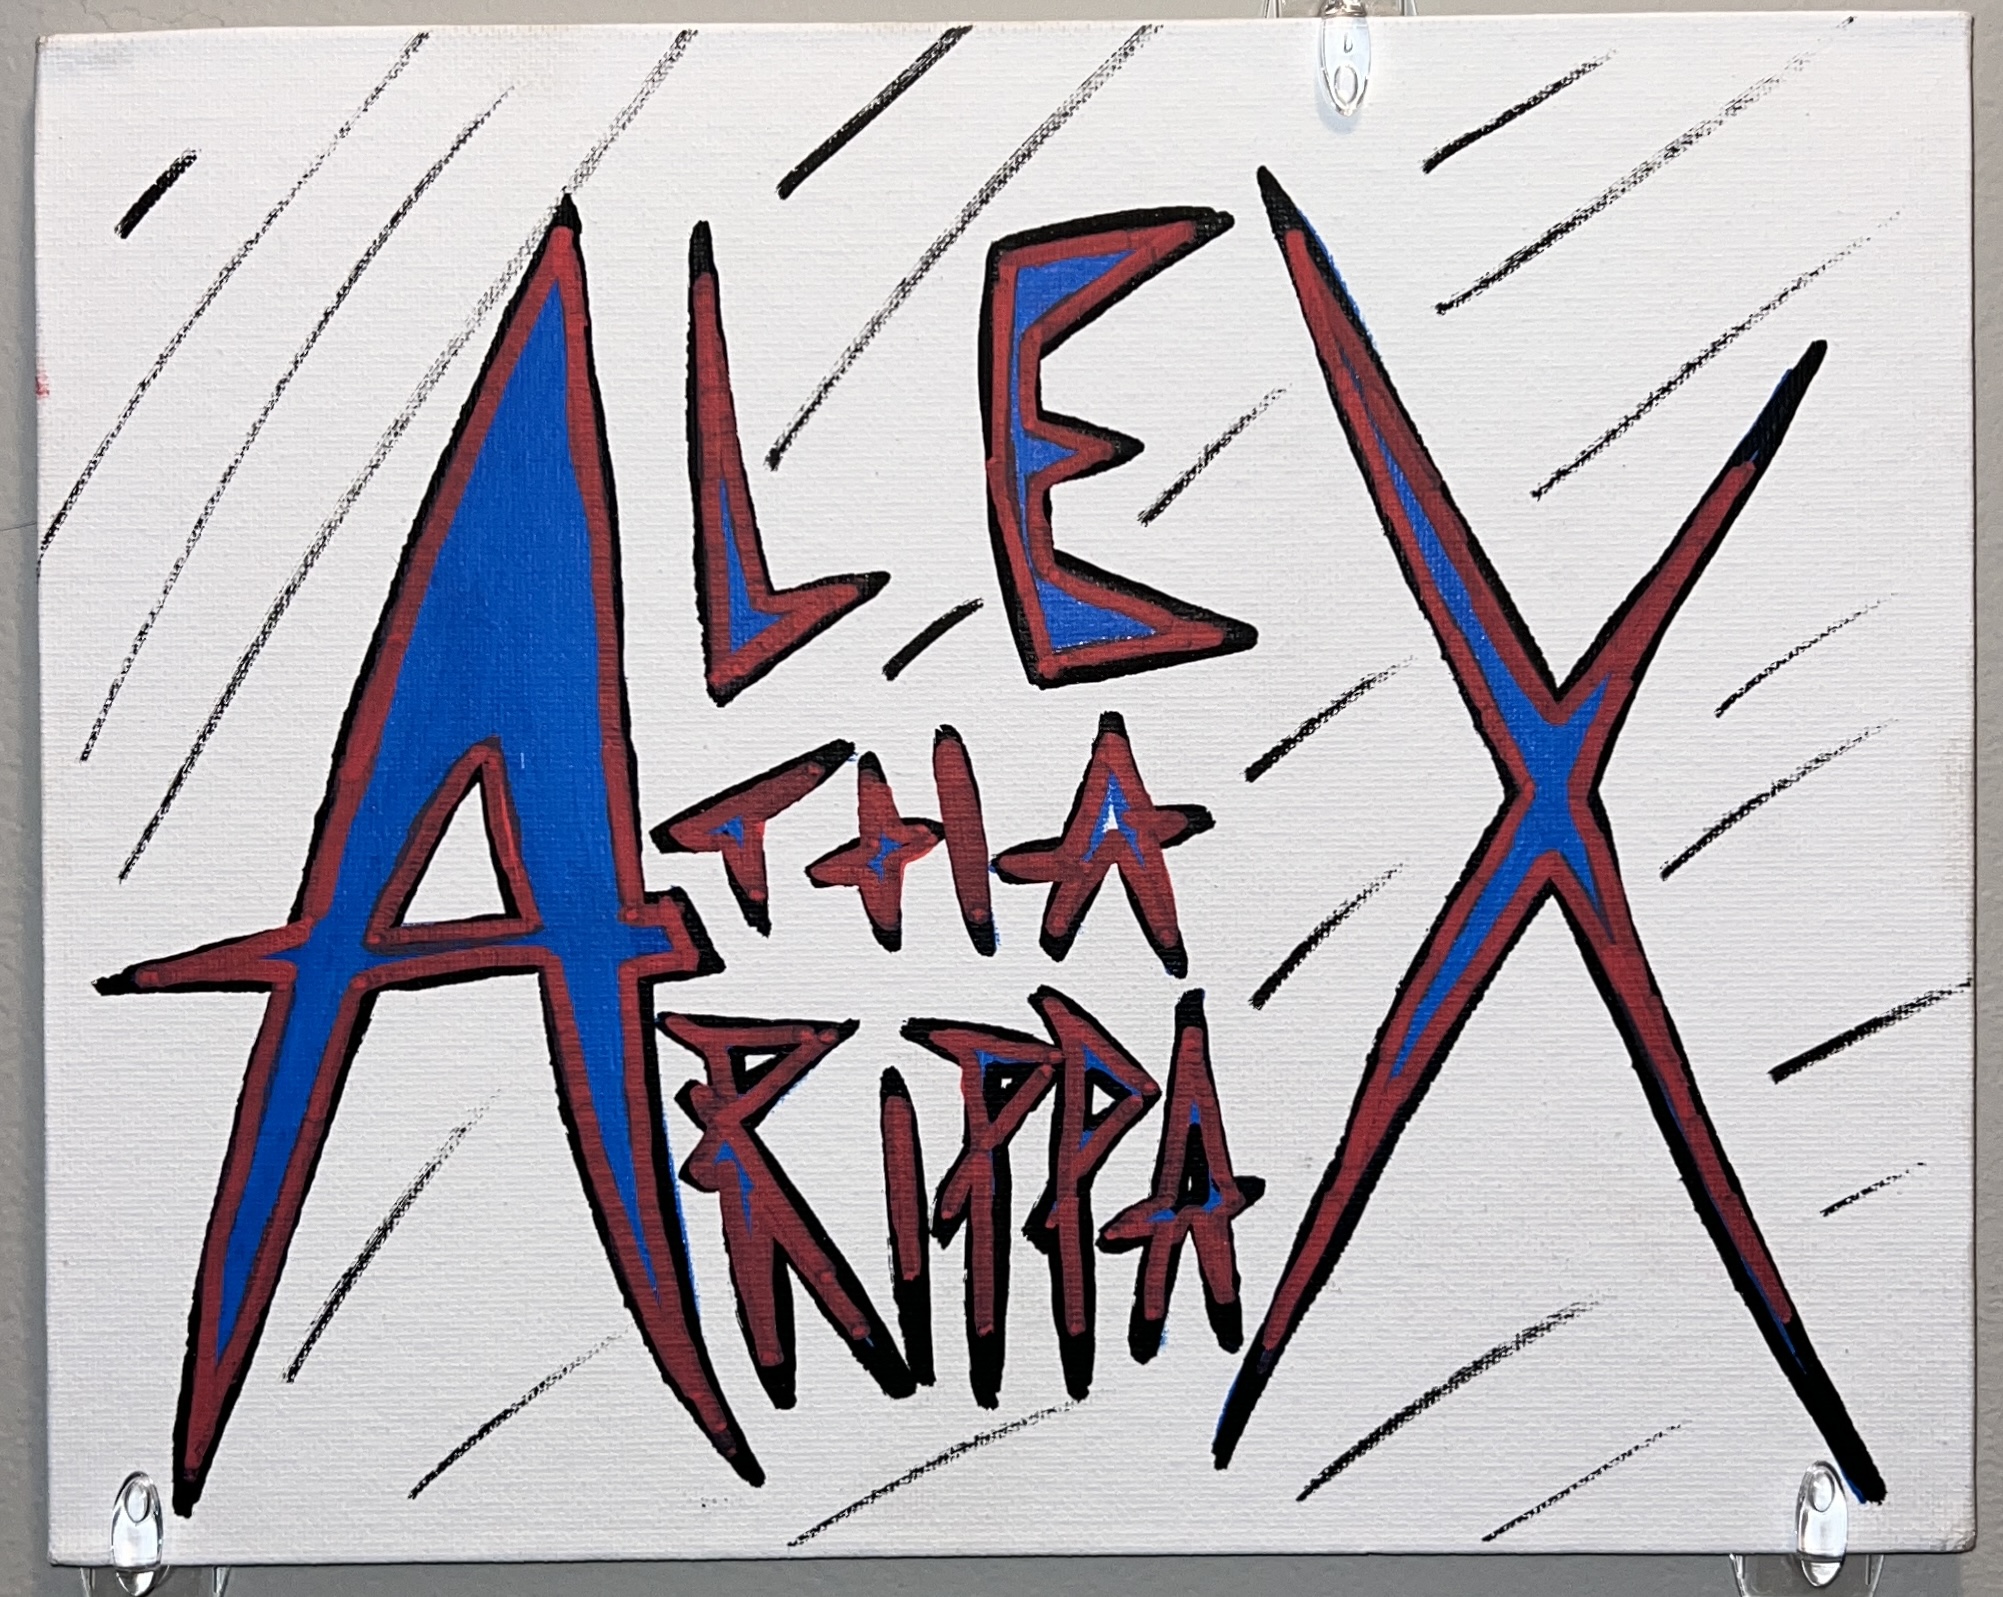 Alex Tha Rippa